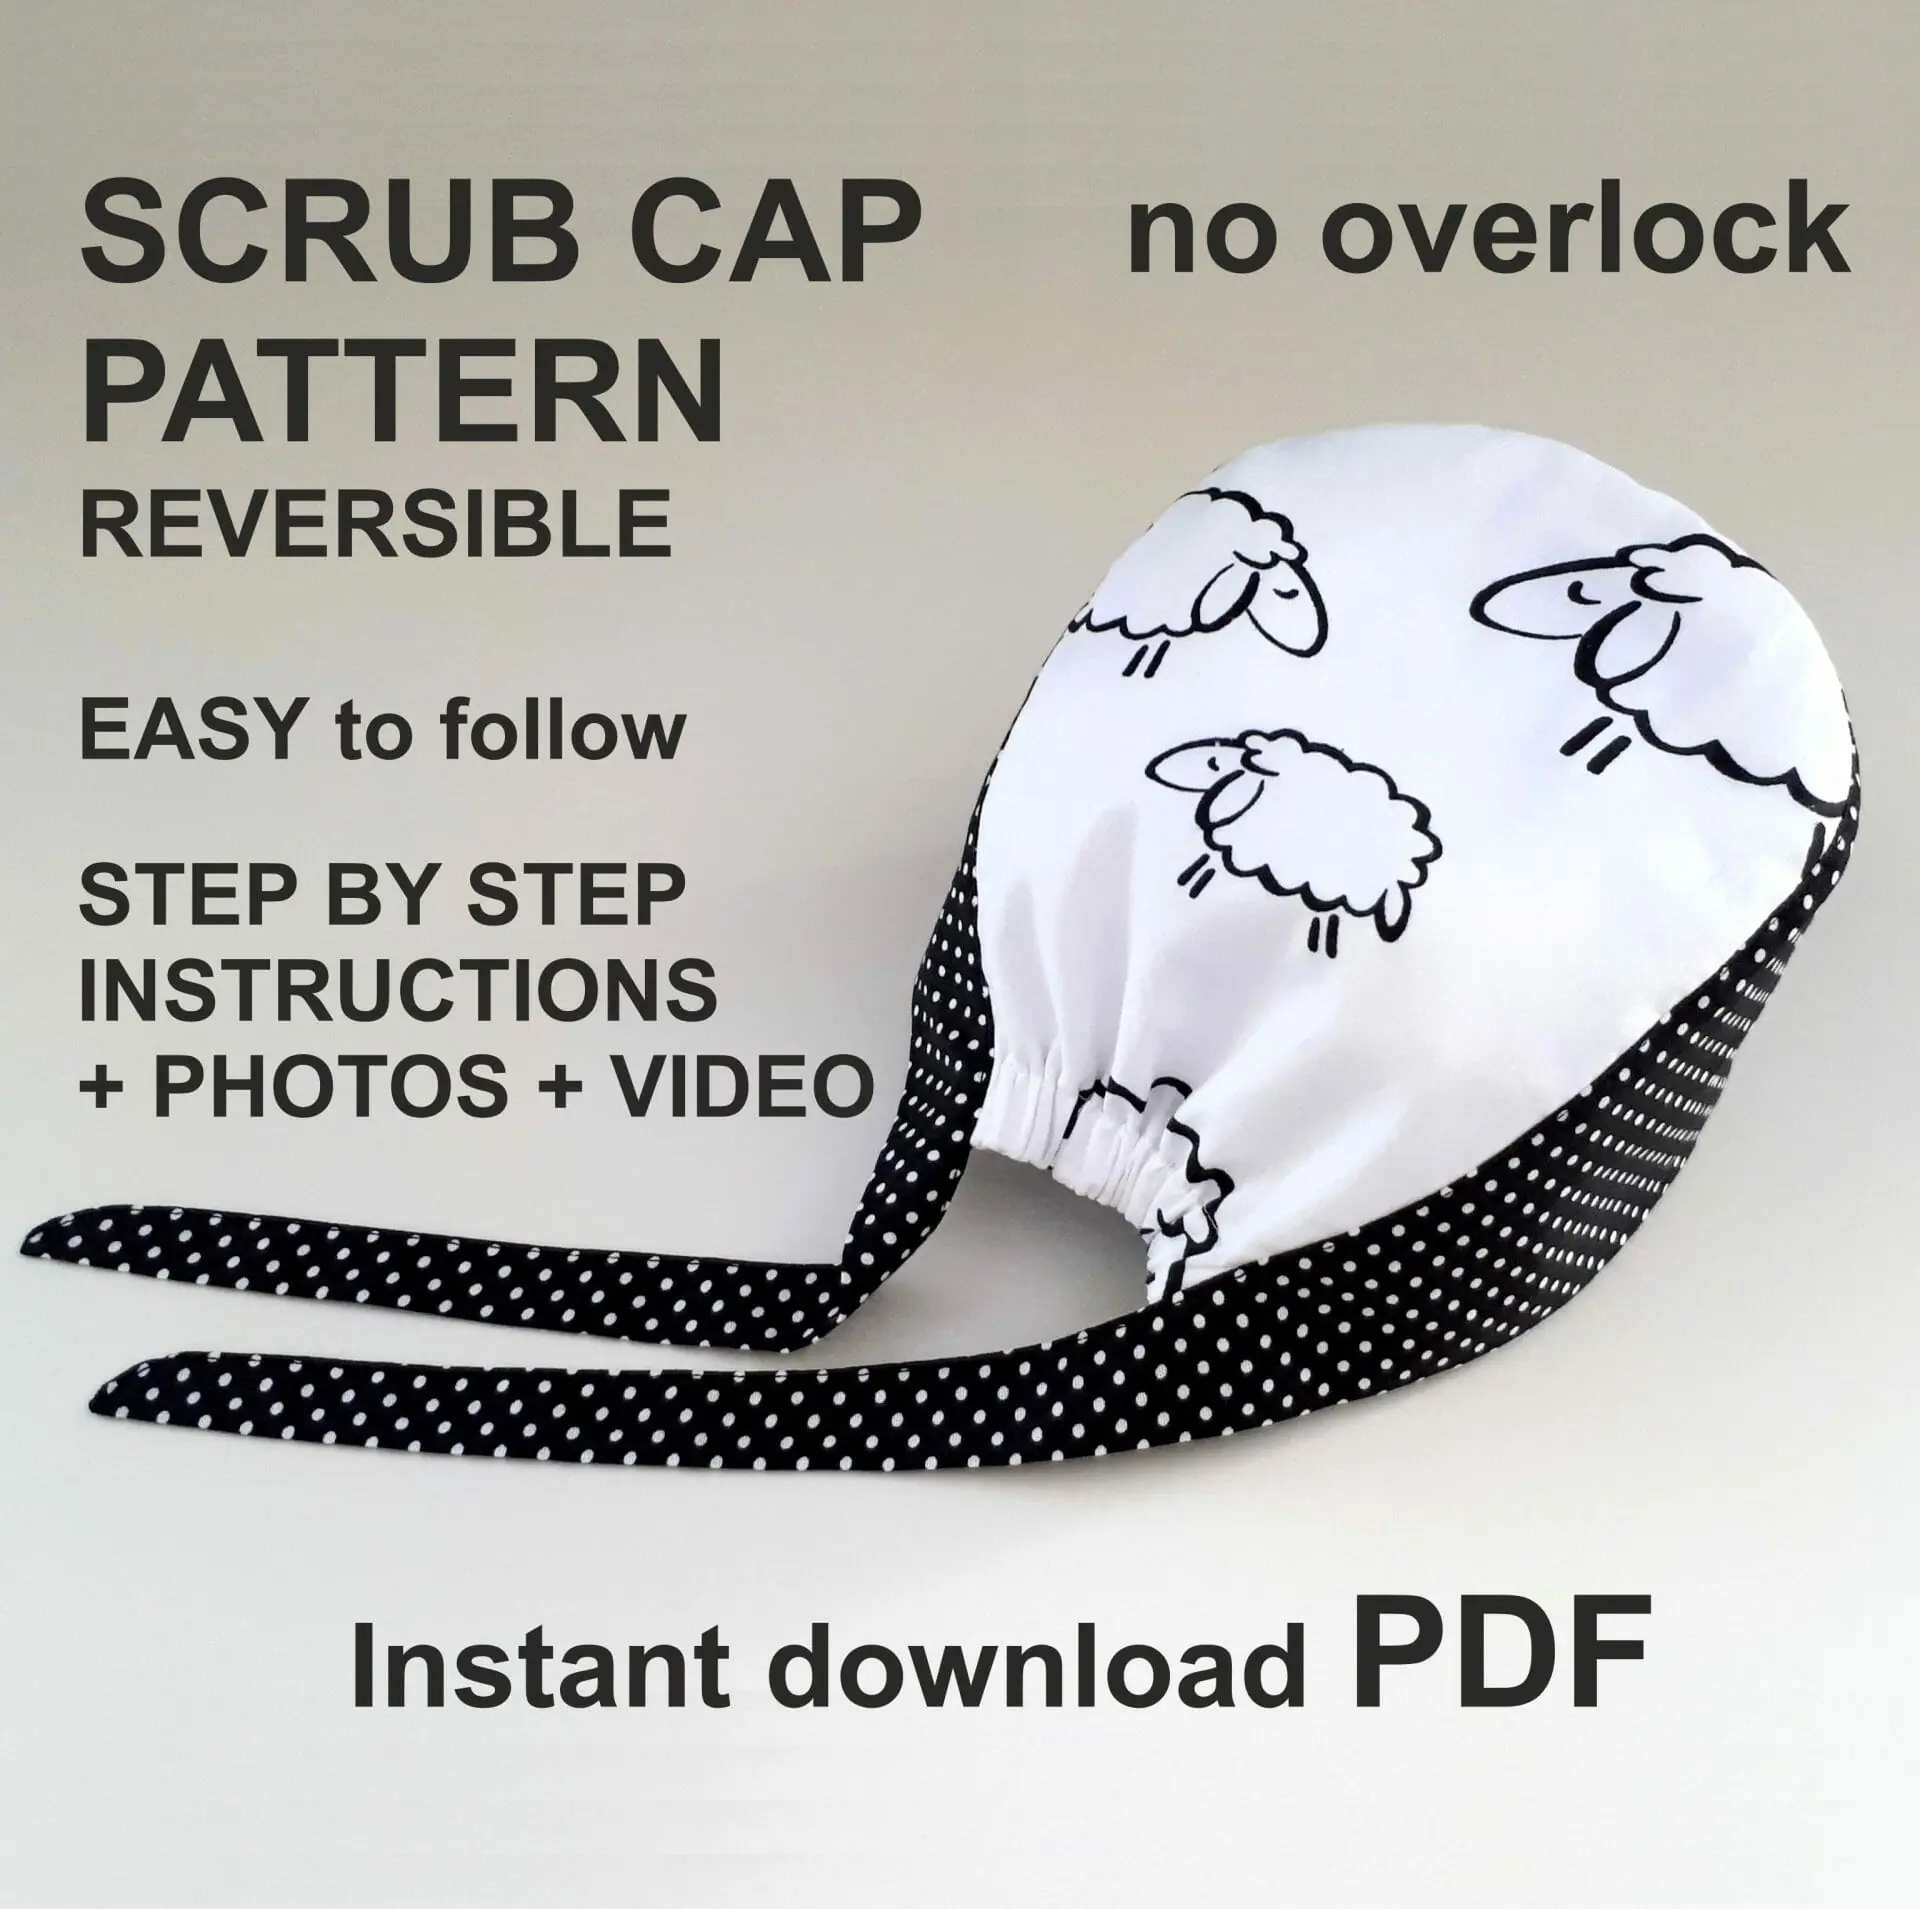 Reversible scrub cap pattern